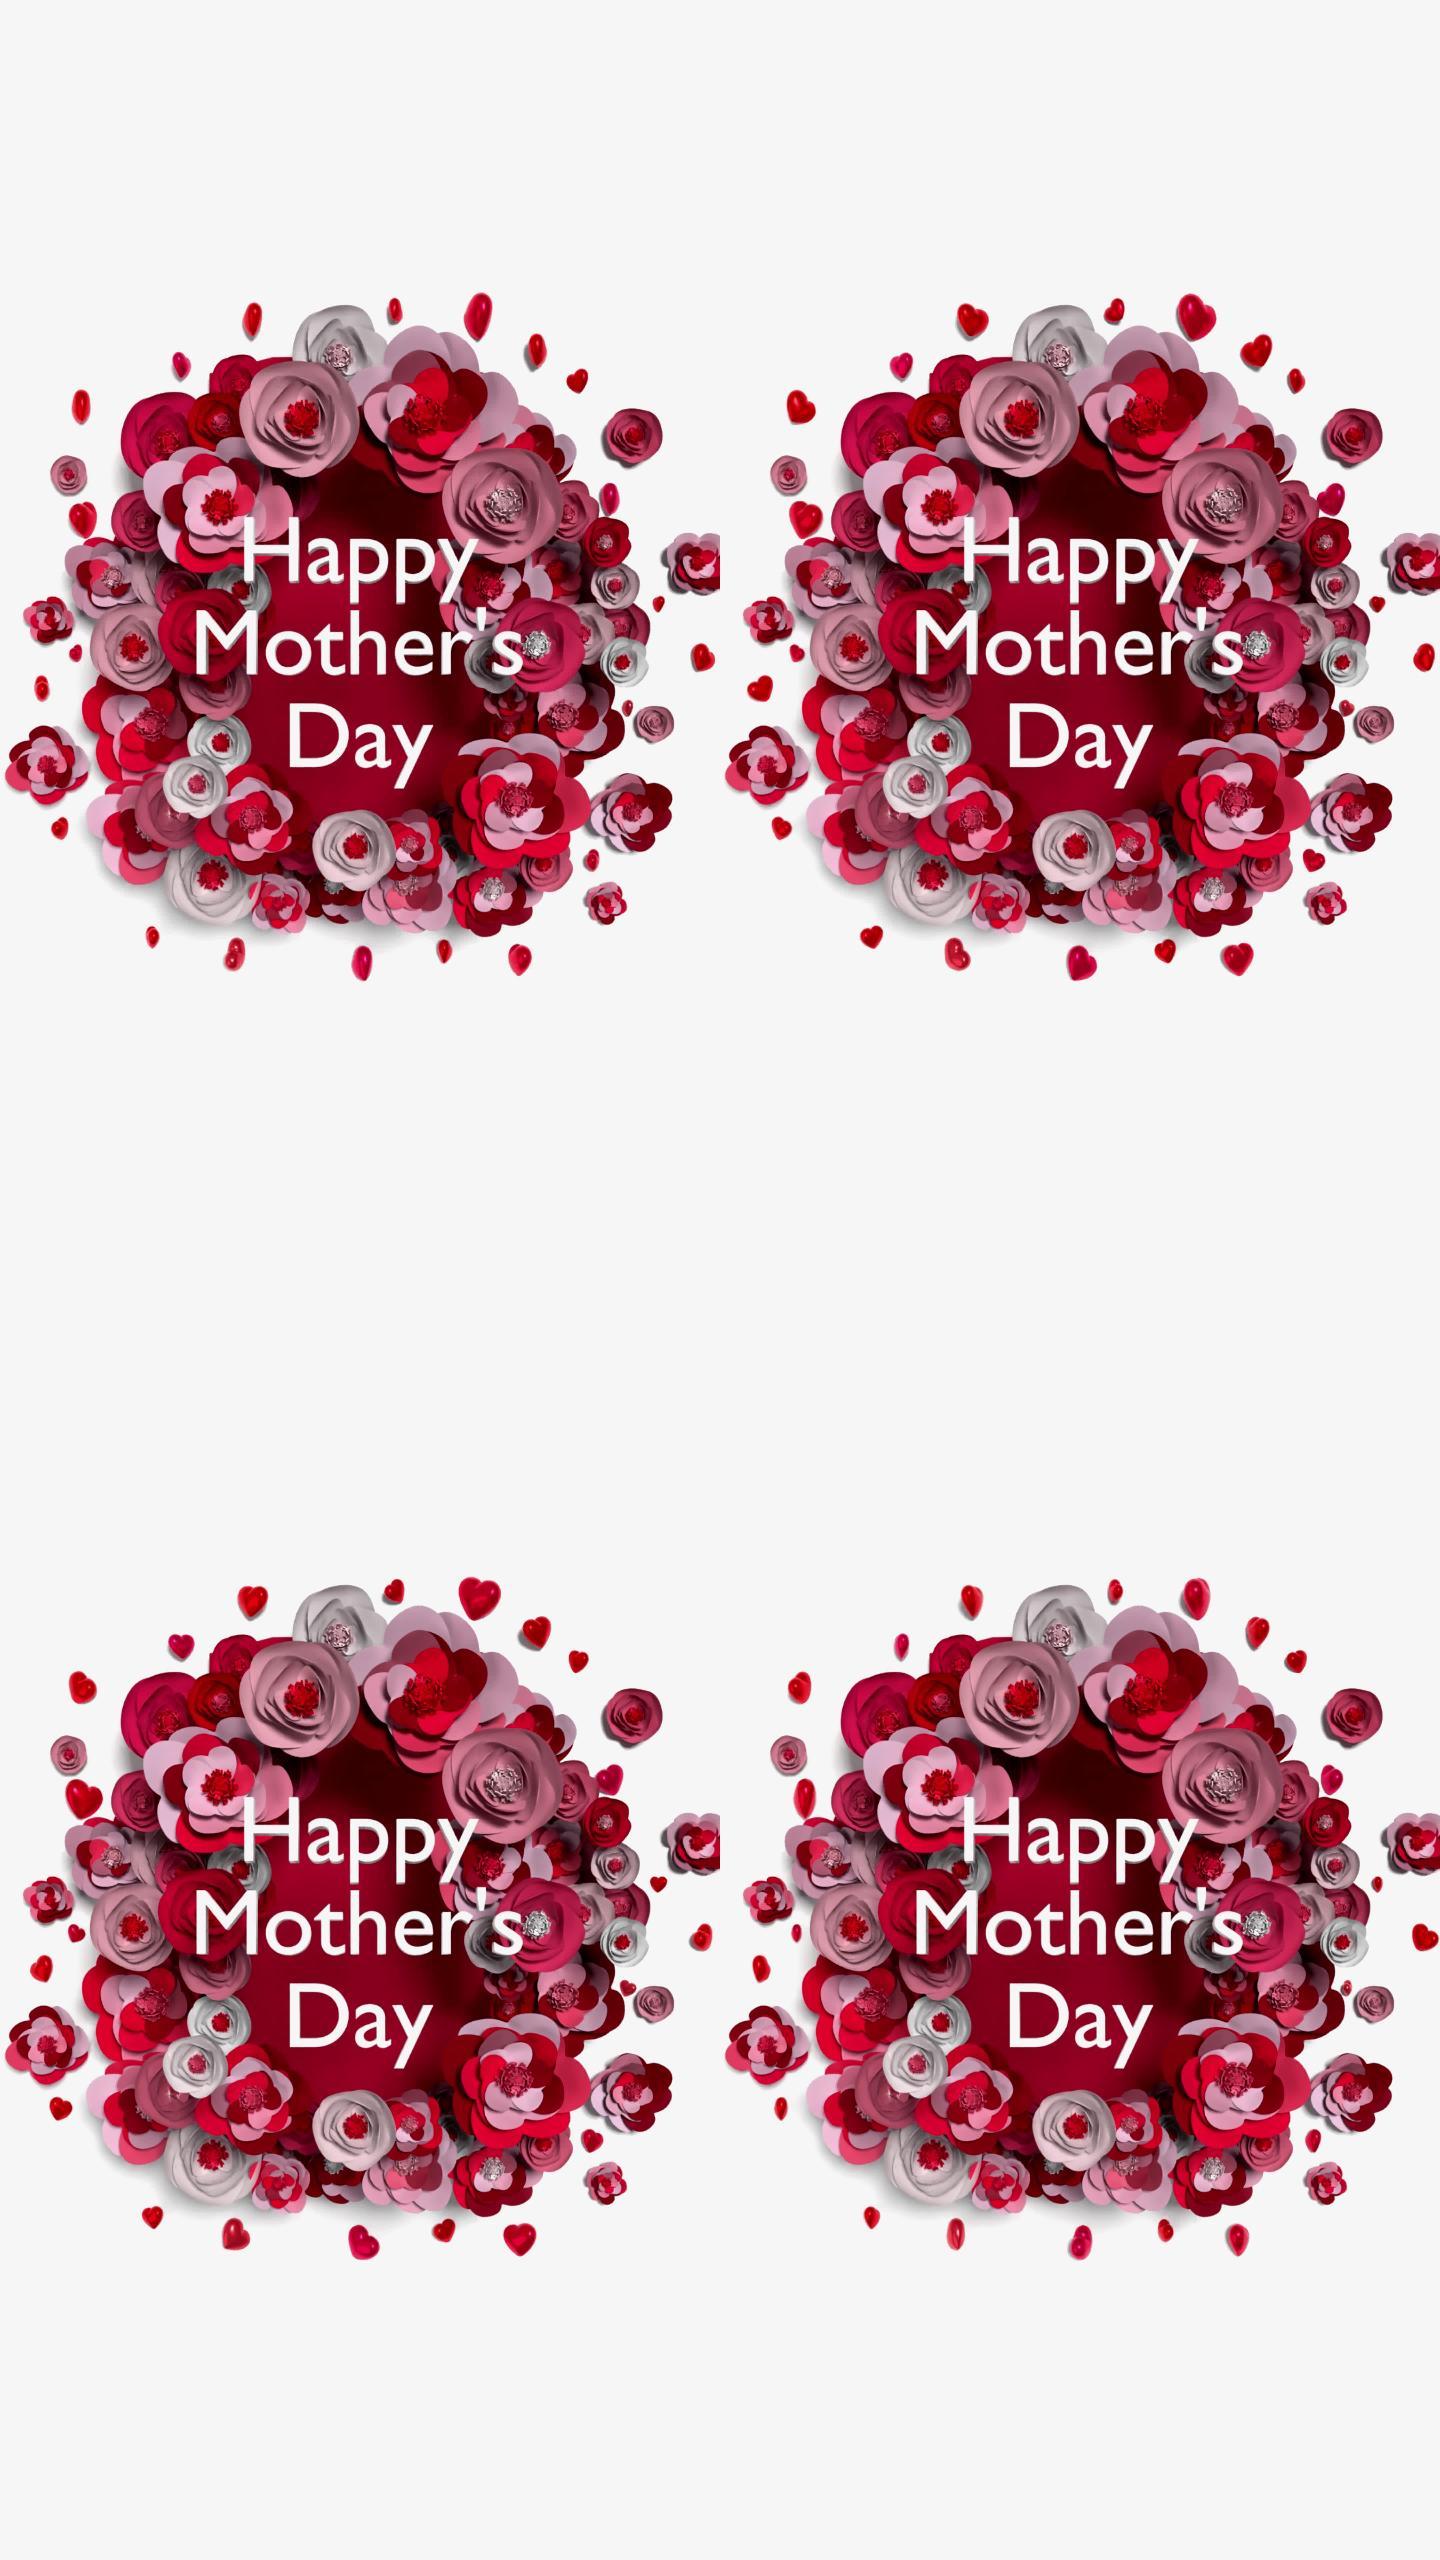 4K分辨率的垂直“母亲节快乐”文本和鲜花庆祝母亲节循环就绪